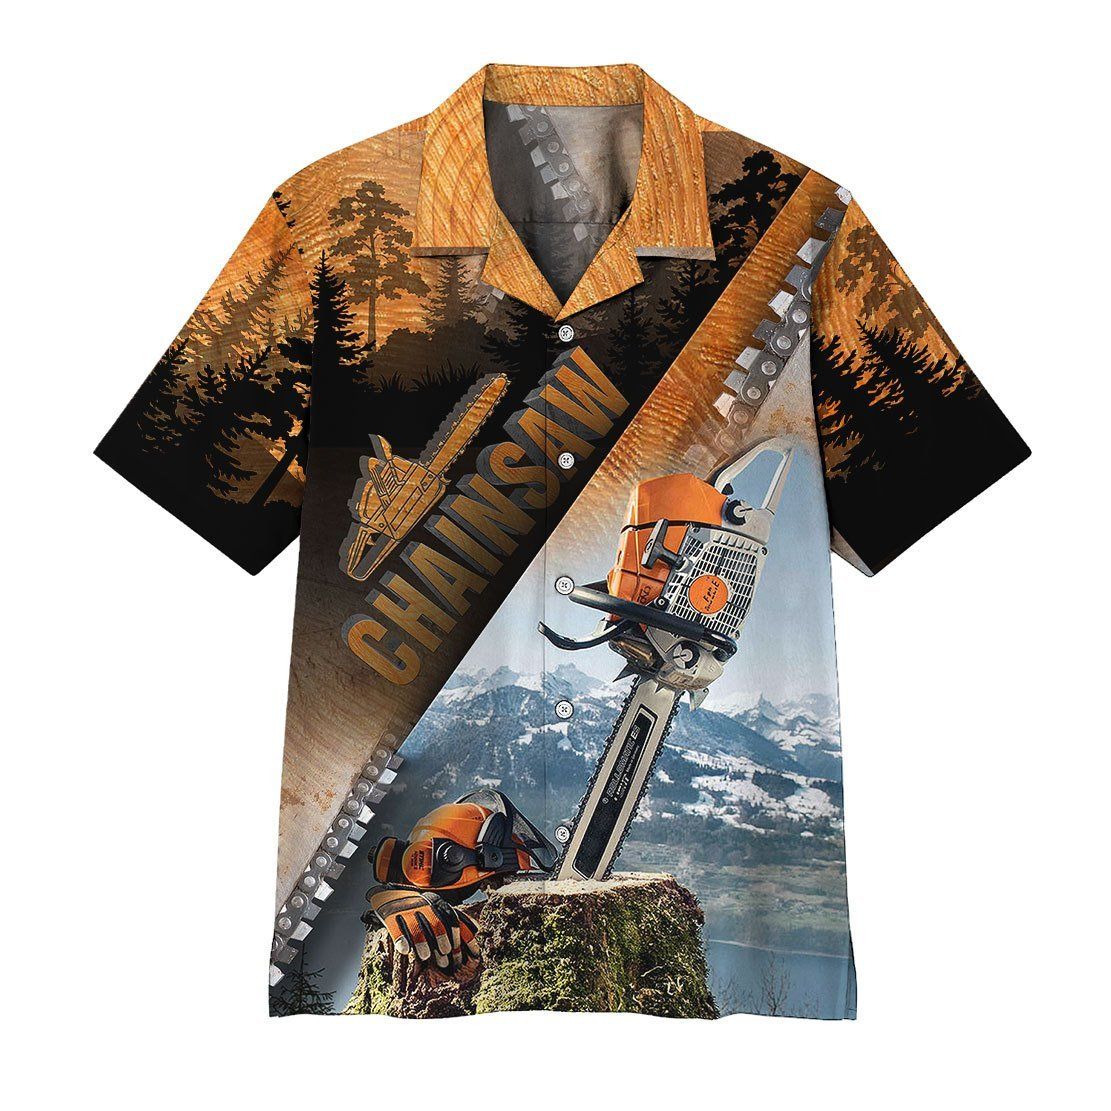 Chainsaw Hawaii Shirt